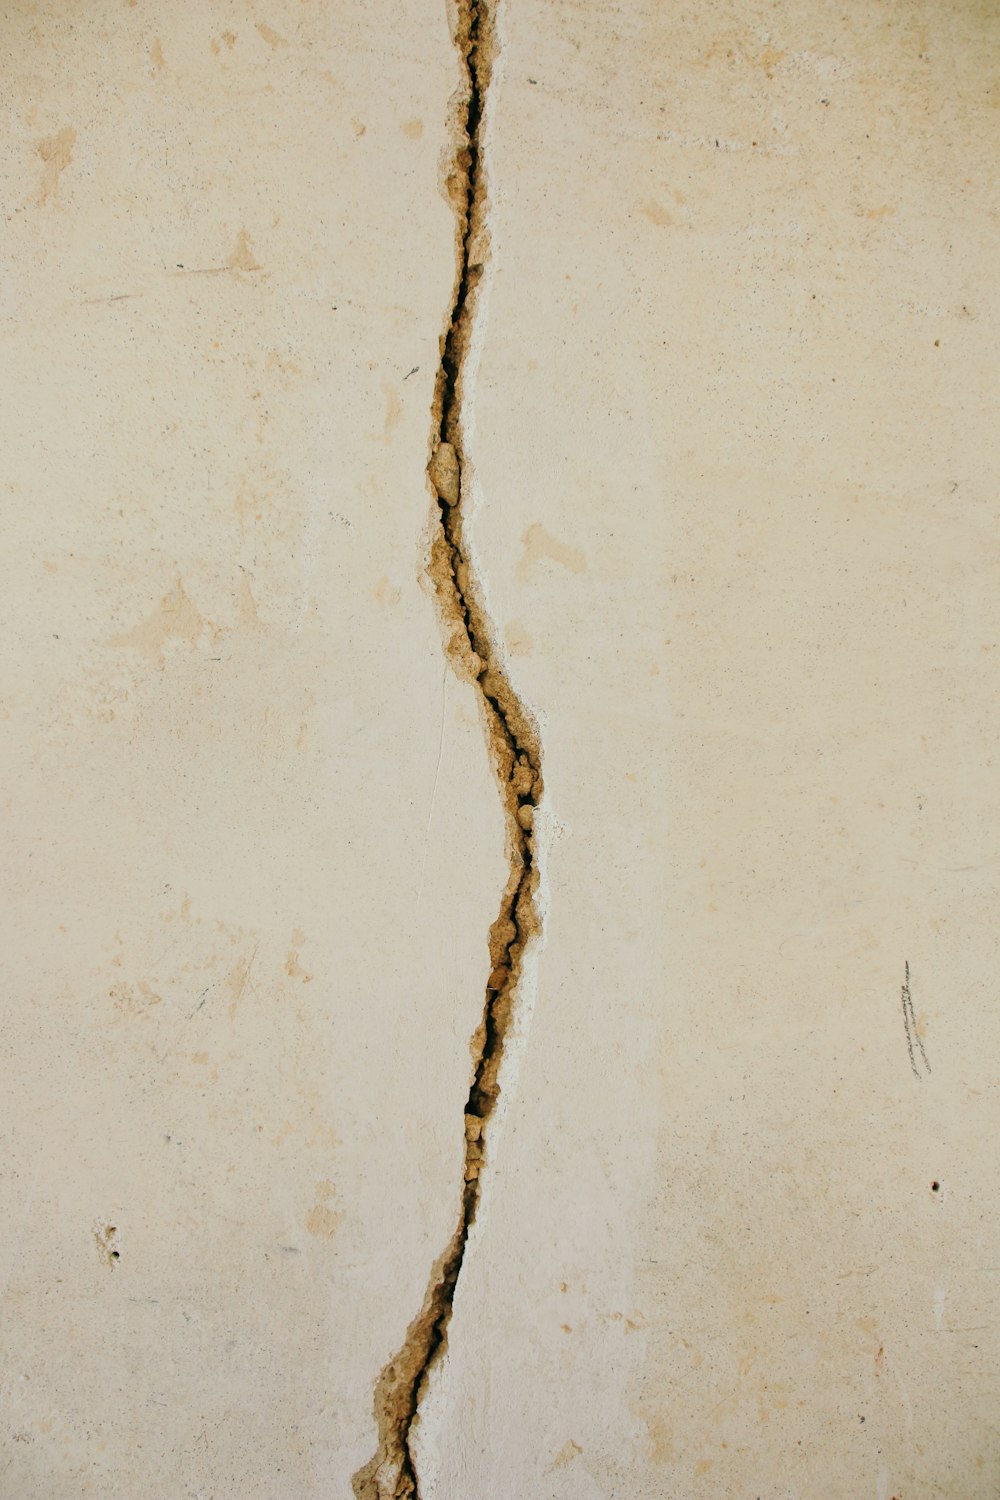 crack on white concrete surface